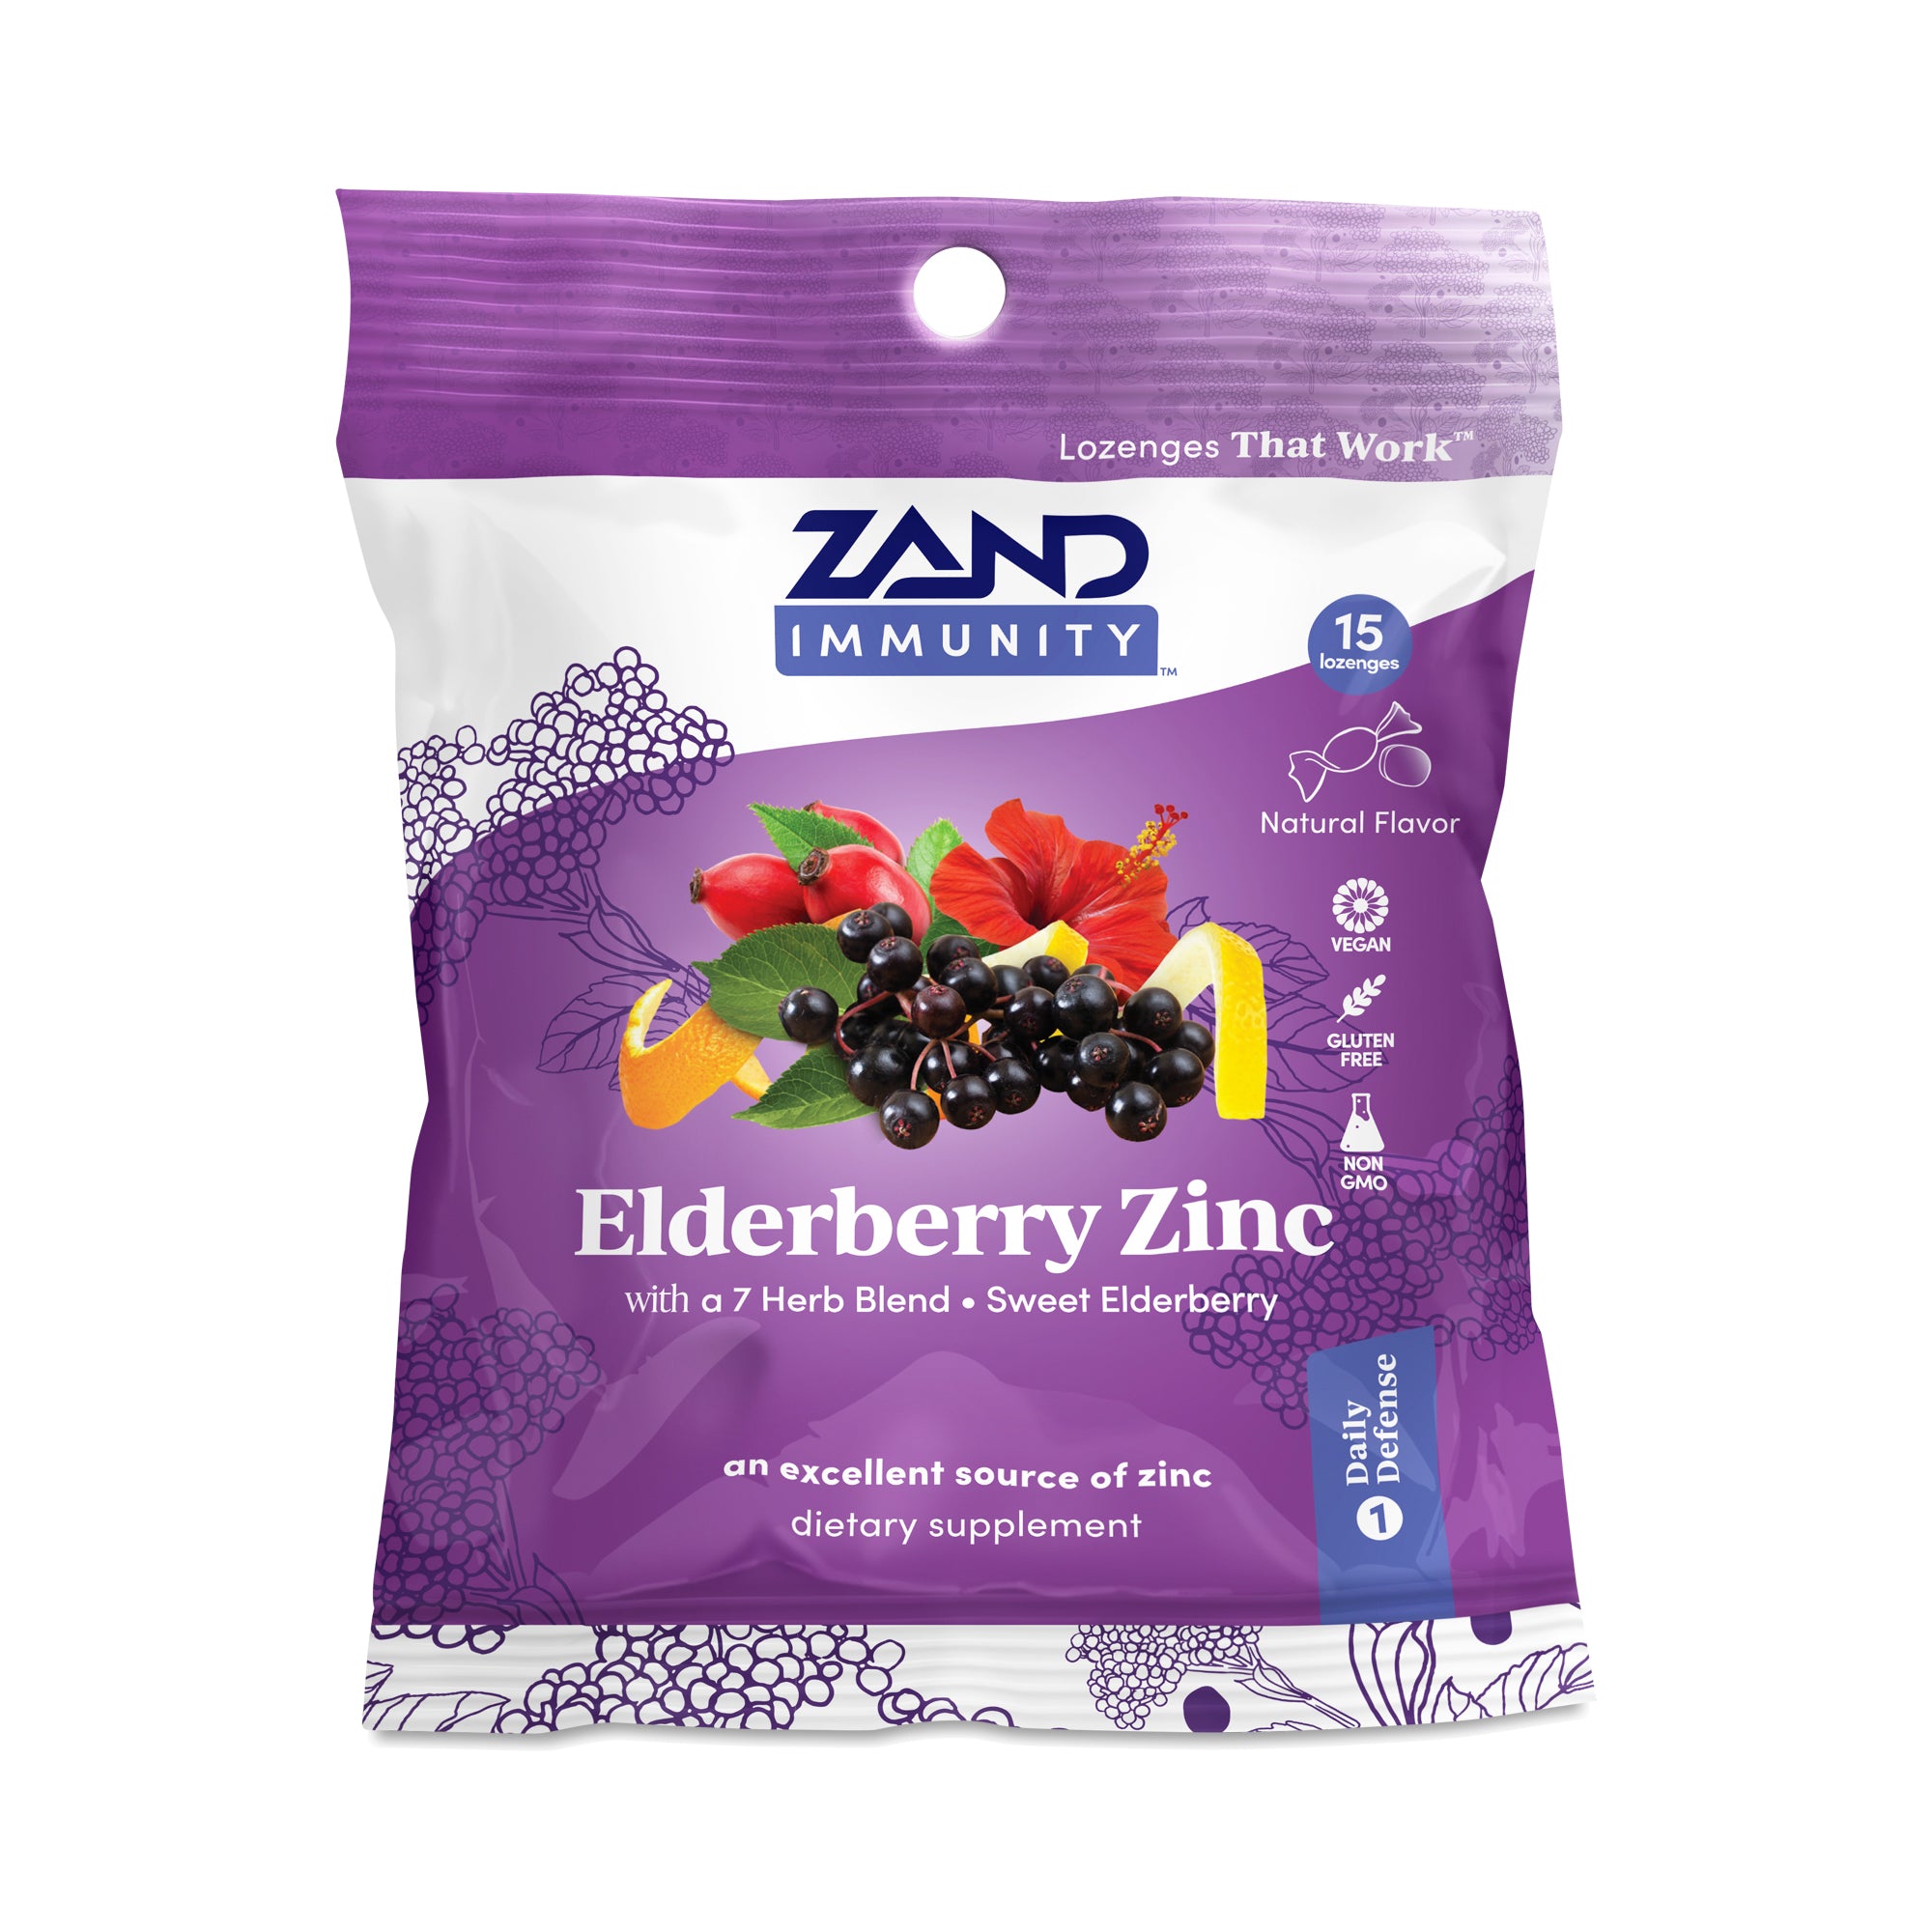 Zand Elderberry Zinc, 5 Mg, 15 Lozenges